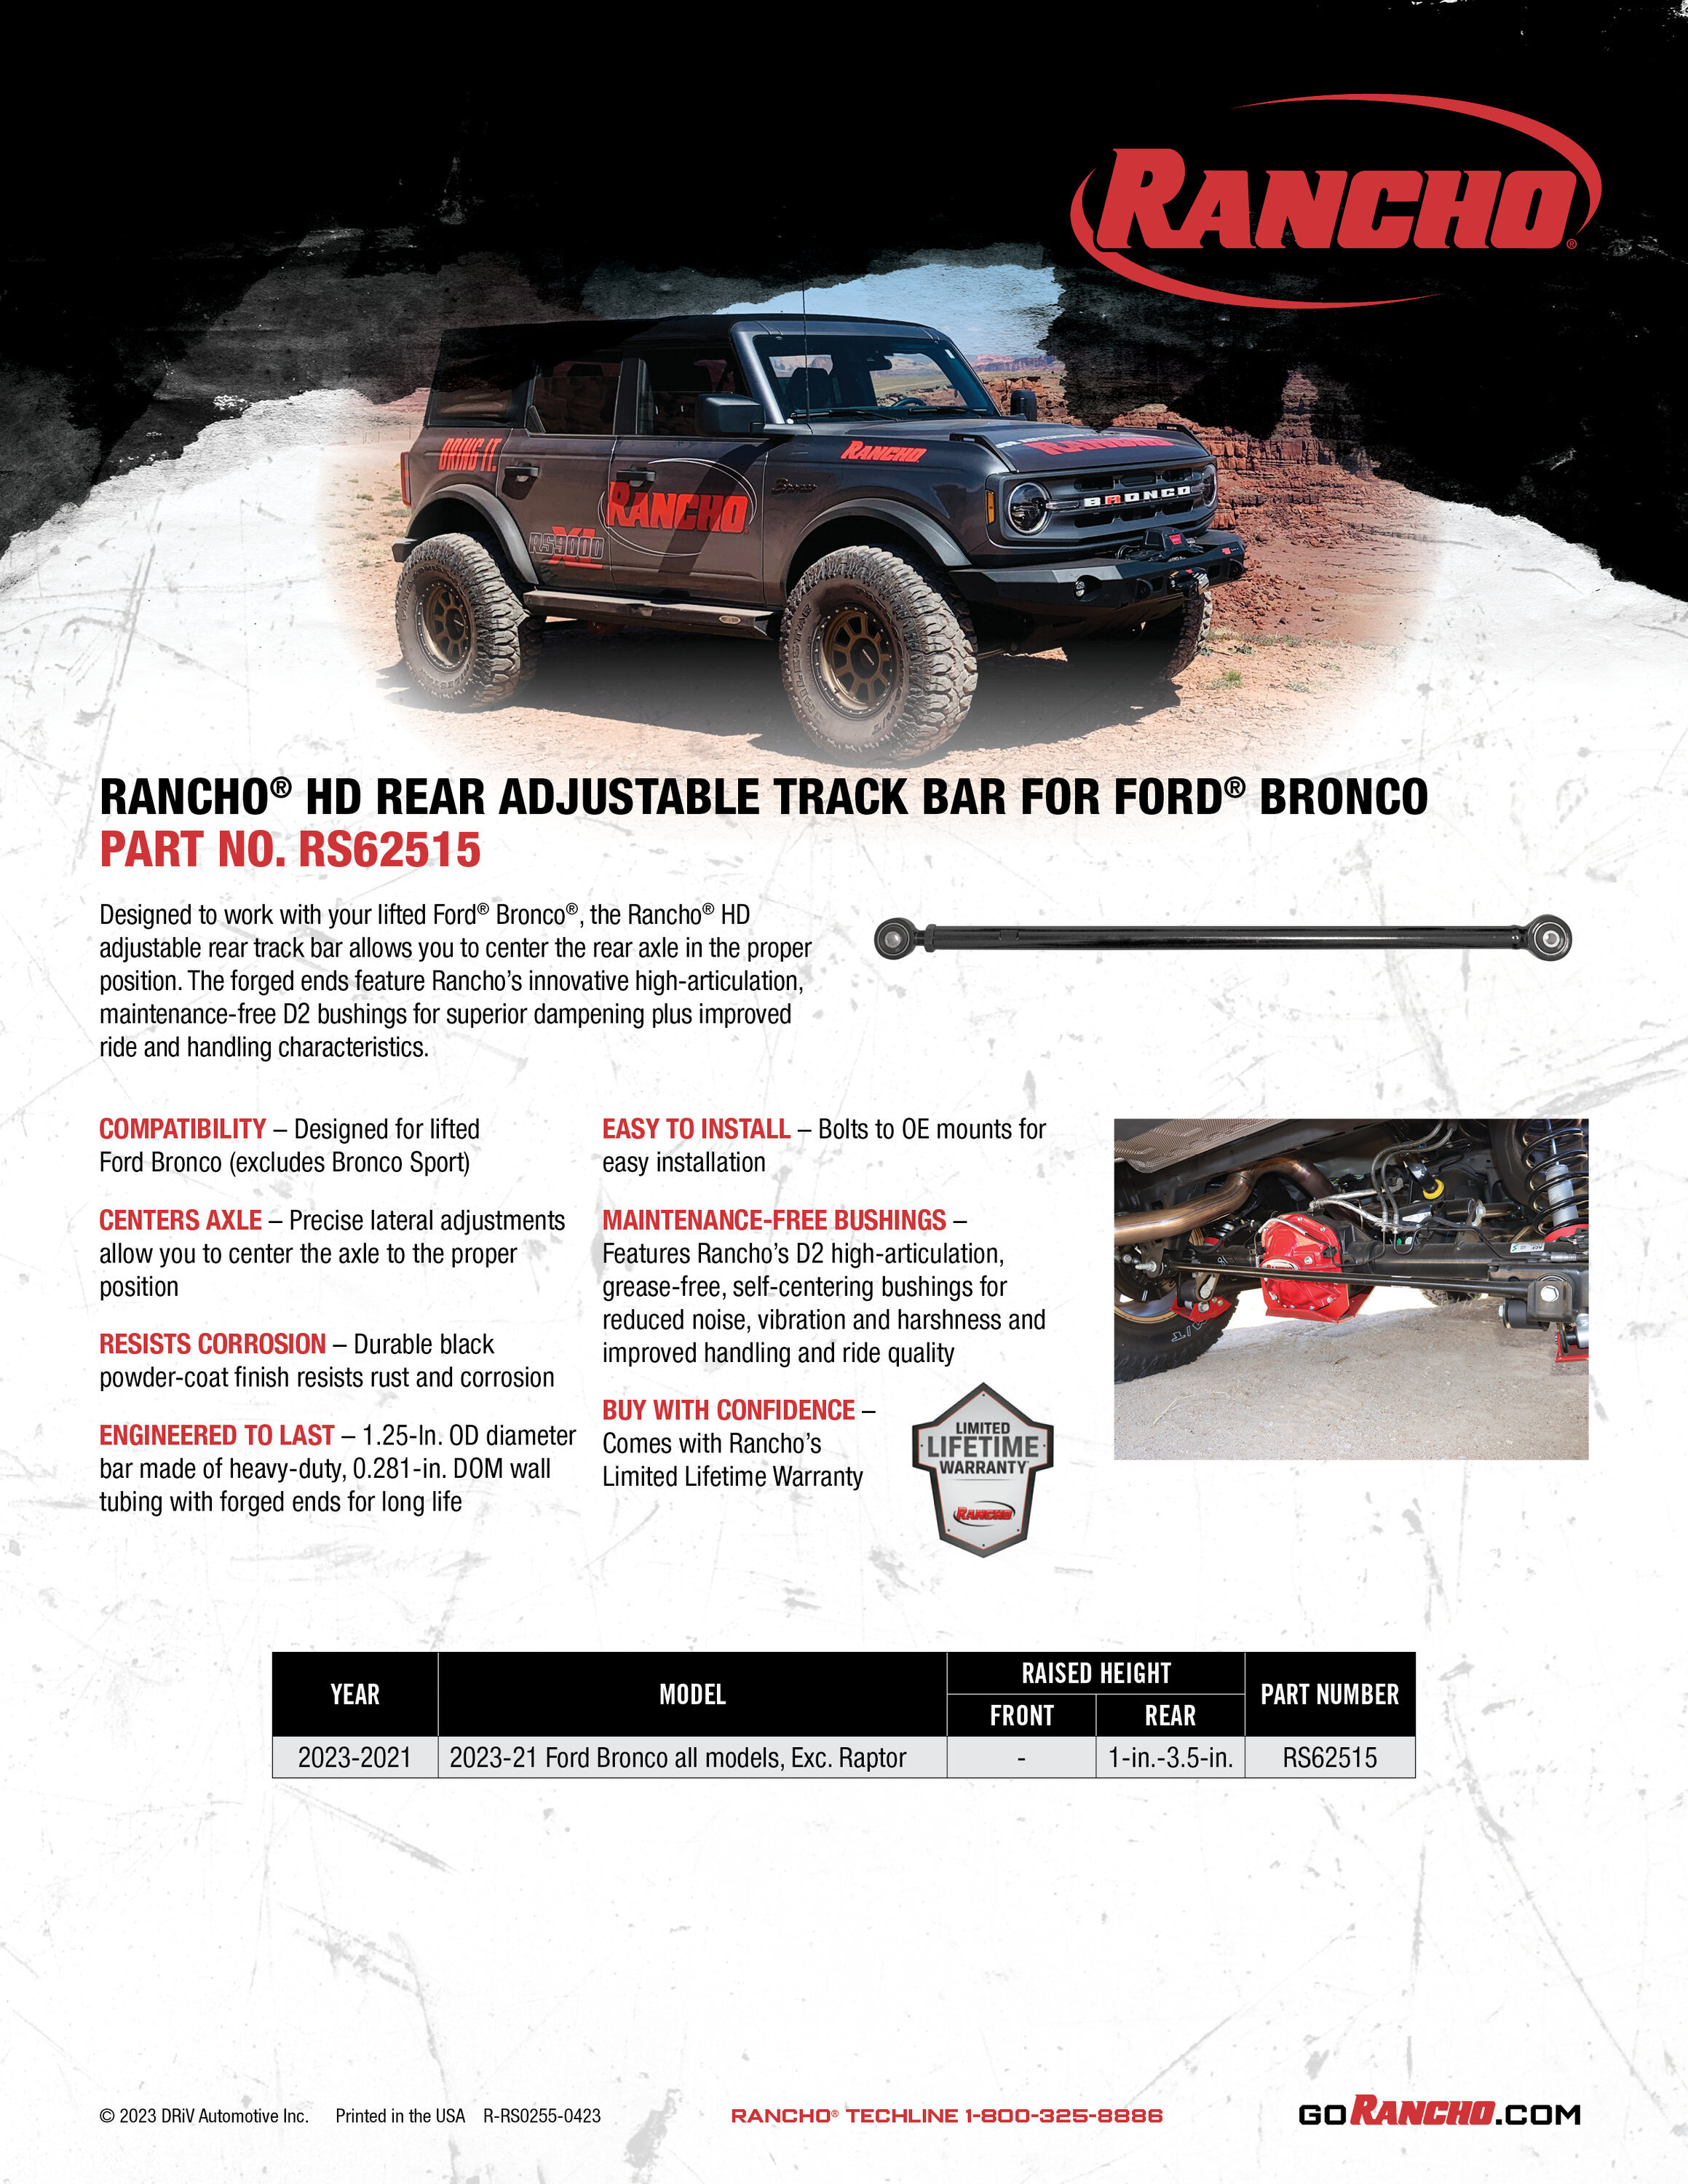 Ford Bronco Rancho heavy duty rear adjustable track bar Bronco_RearAdjustableTrackBar_RS62515_Sell_032723